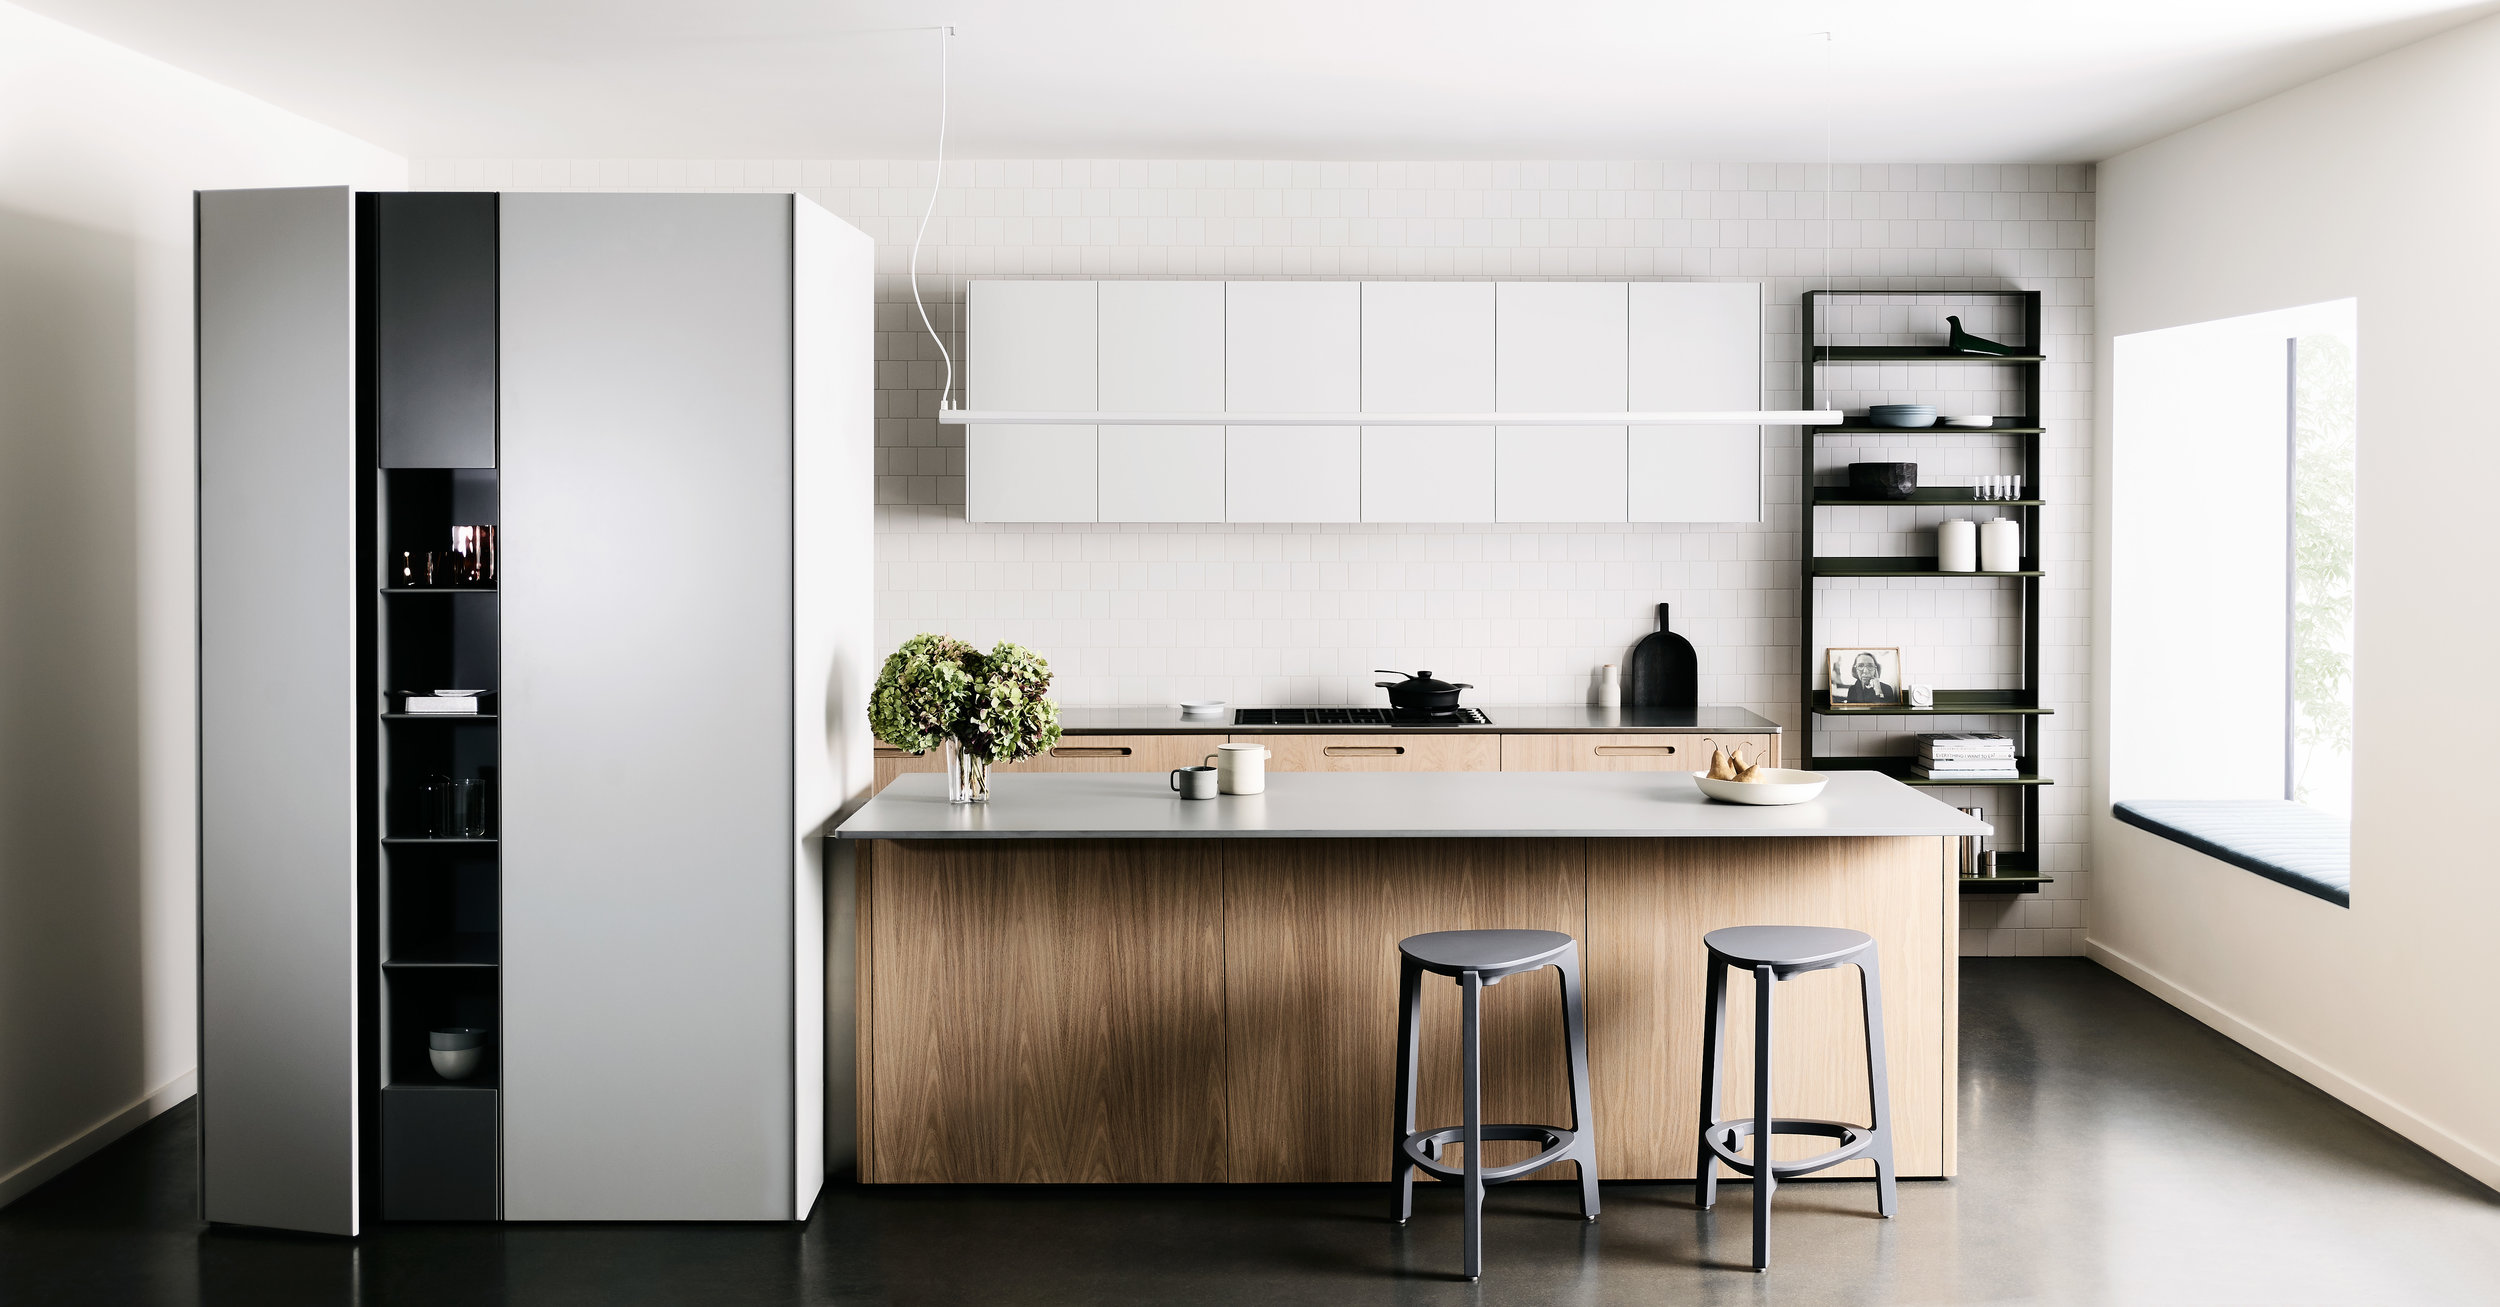 Tableau Cantilever DesignOffice Kitchen System Australia (3).jpg